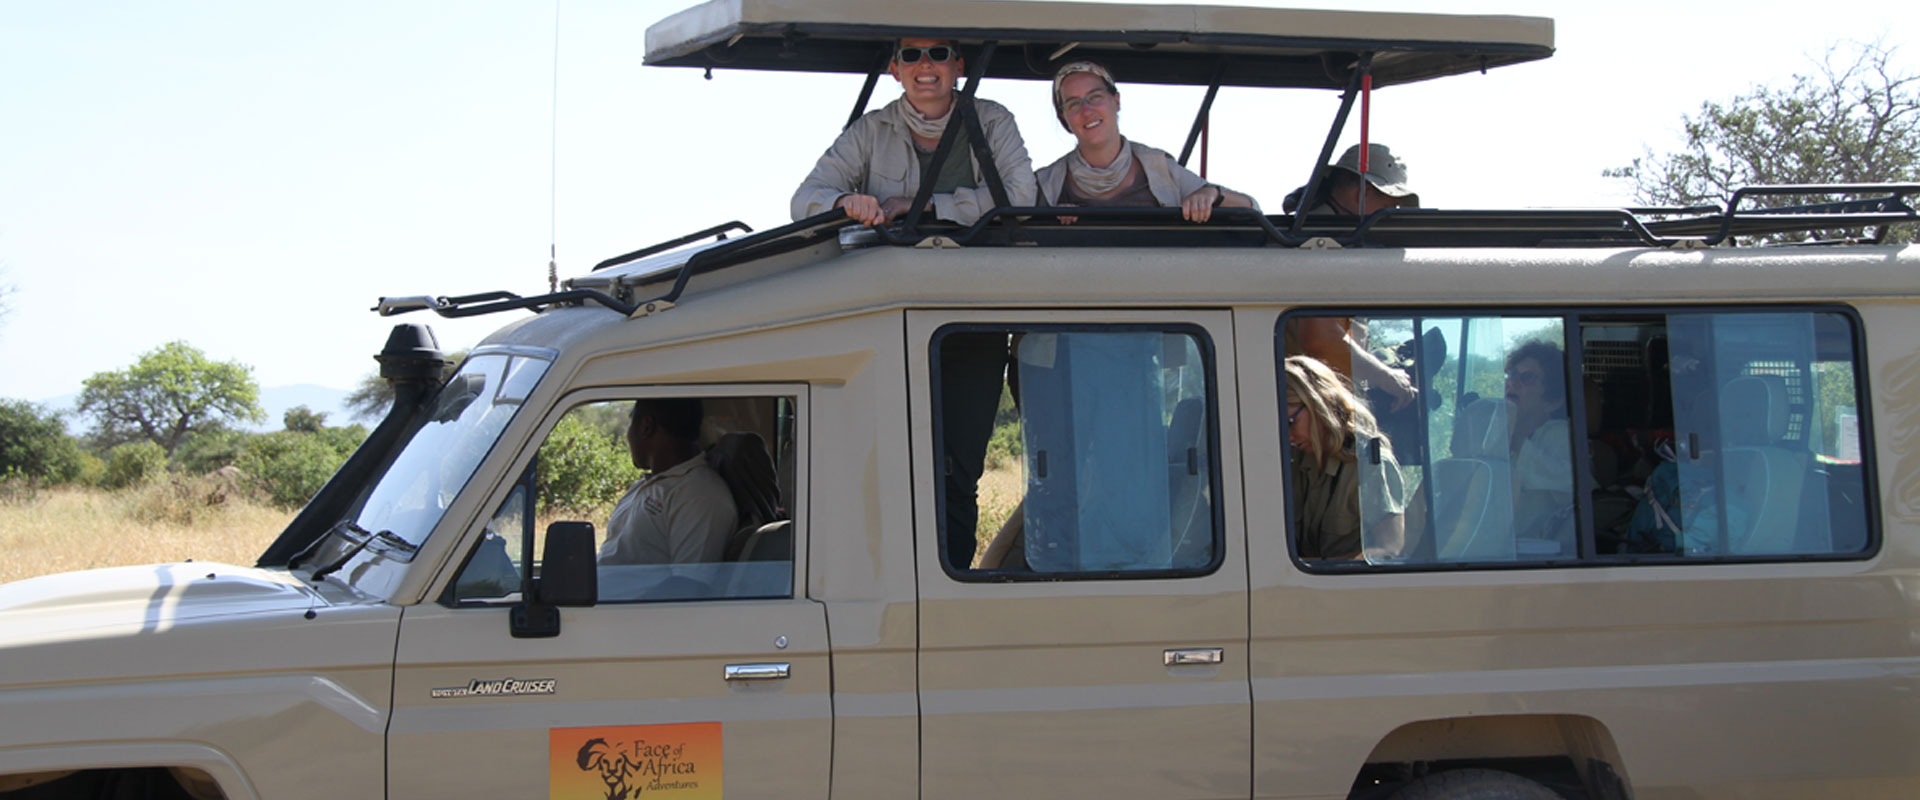 Tanzania Safari Tours – An Adventure for Every Generation!